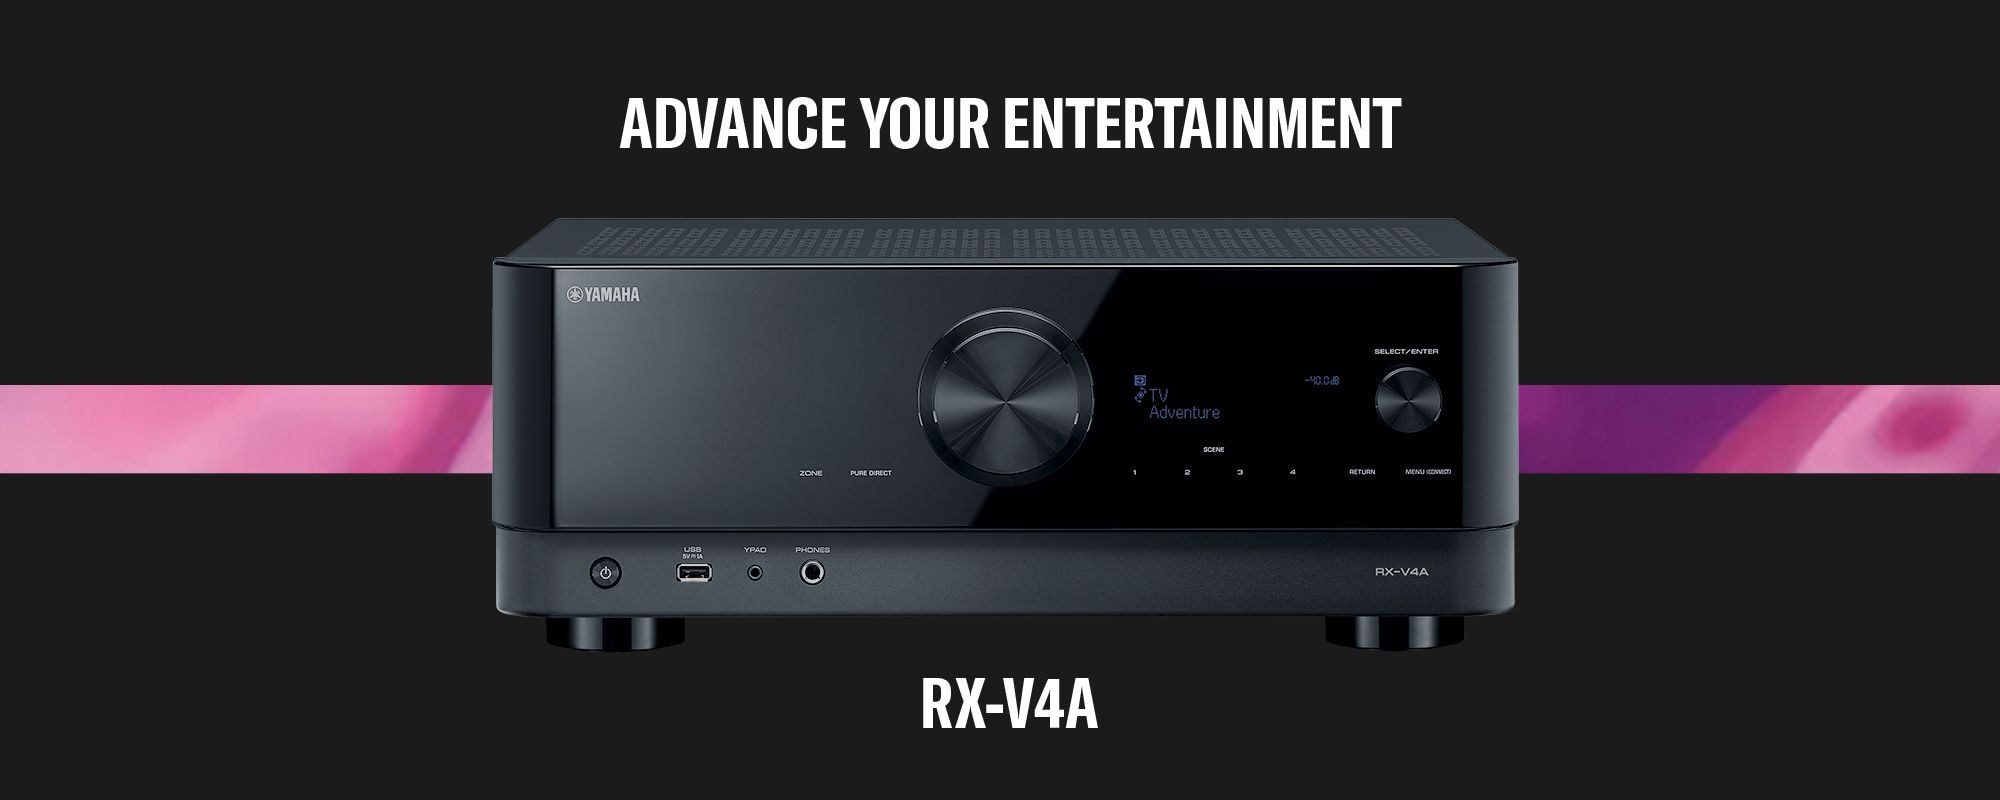 Receiver Yamaha 8K RX-V4A / USA – HDMI channel 4K 5.1 AV